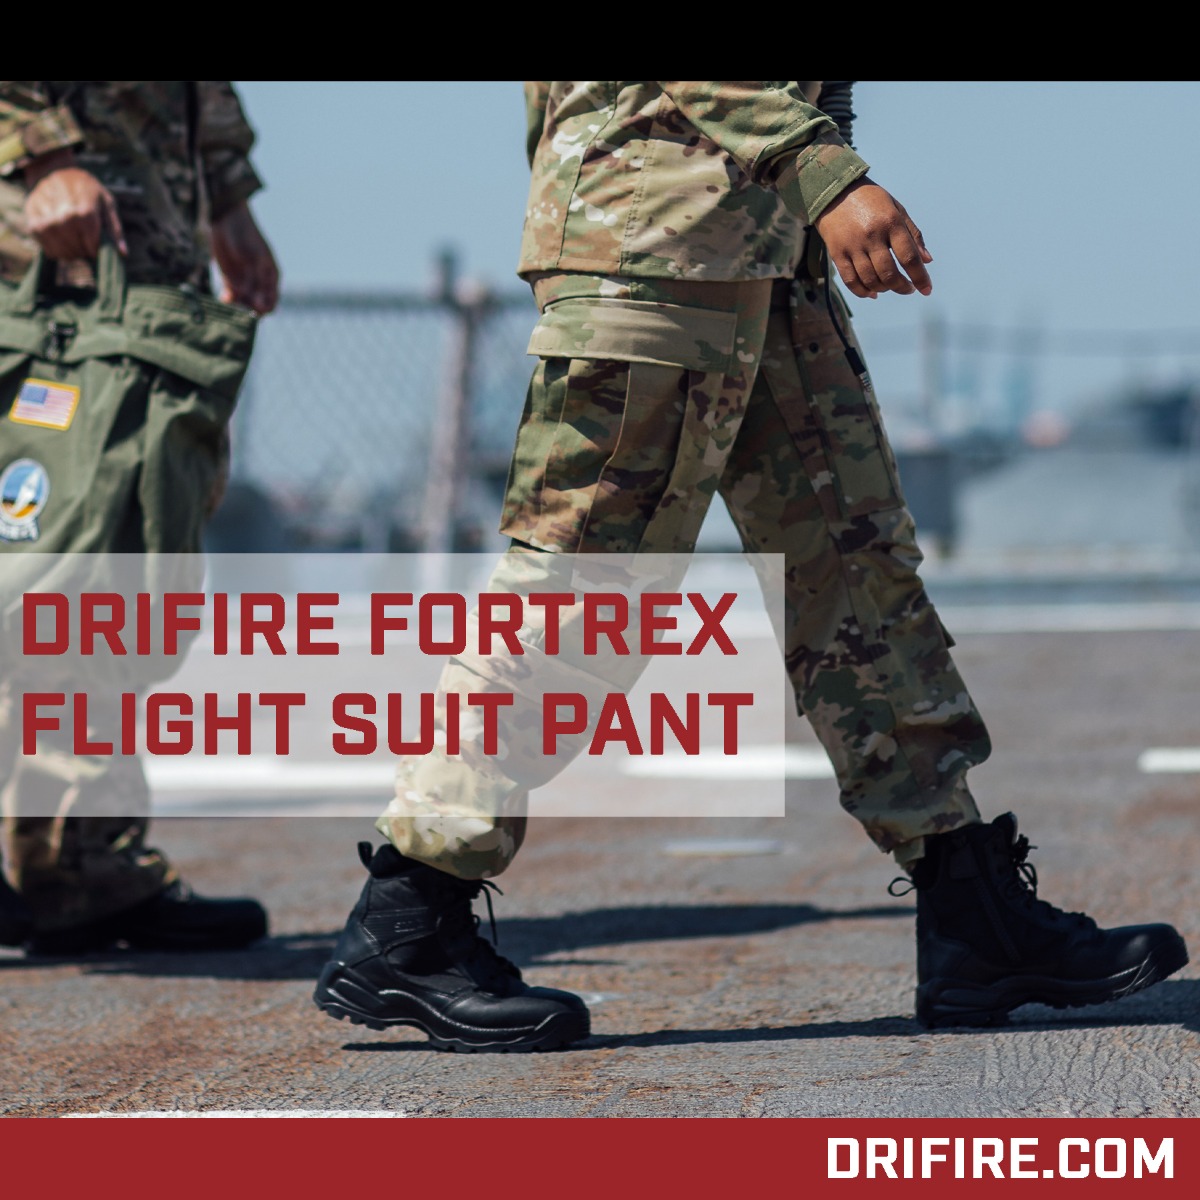 DRIFIRE FORTREX V2 FR Flight Suit Pant